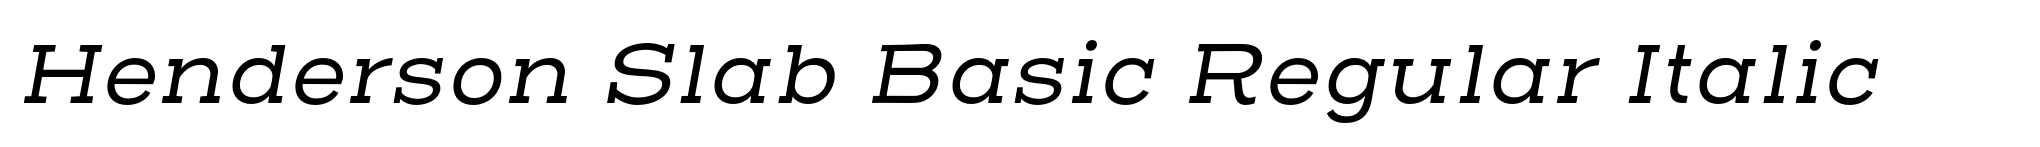 Henderson Slab Basic Regular Italic image